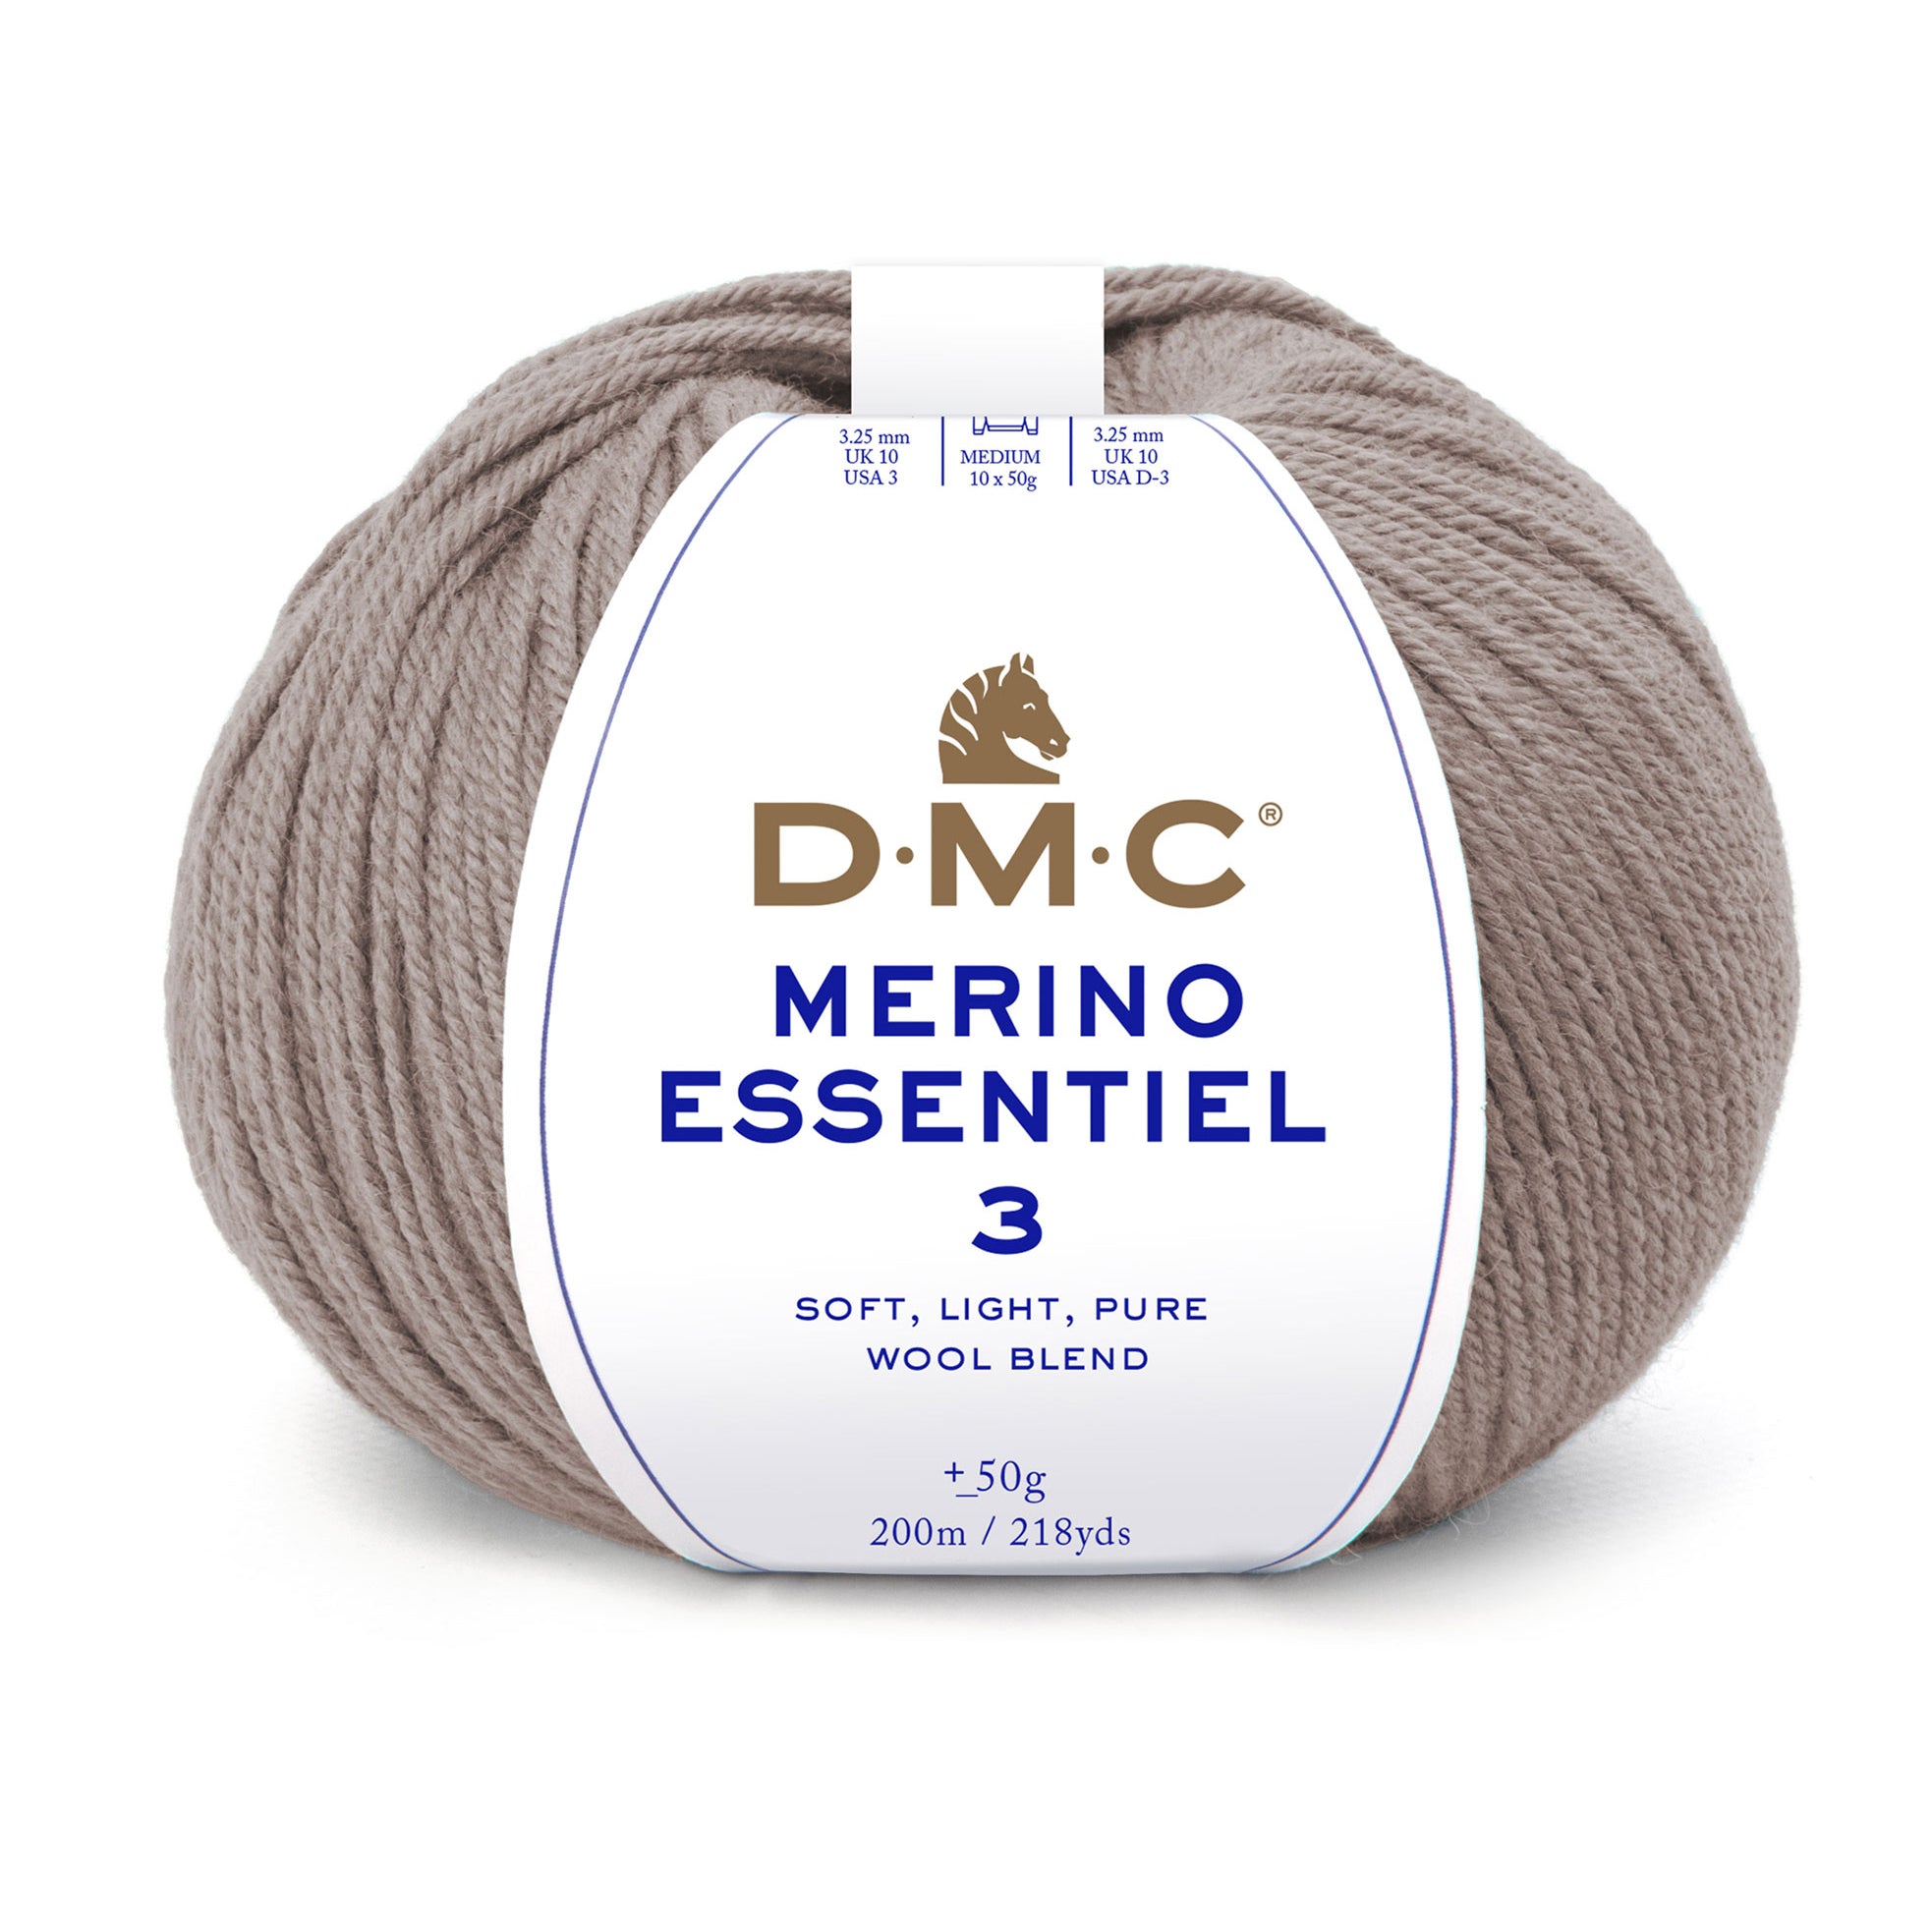 DMC Merino Essentiel 3 - High quality Merino wool and acrylic for knitting warm and soft garments